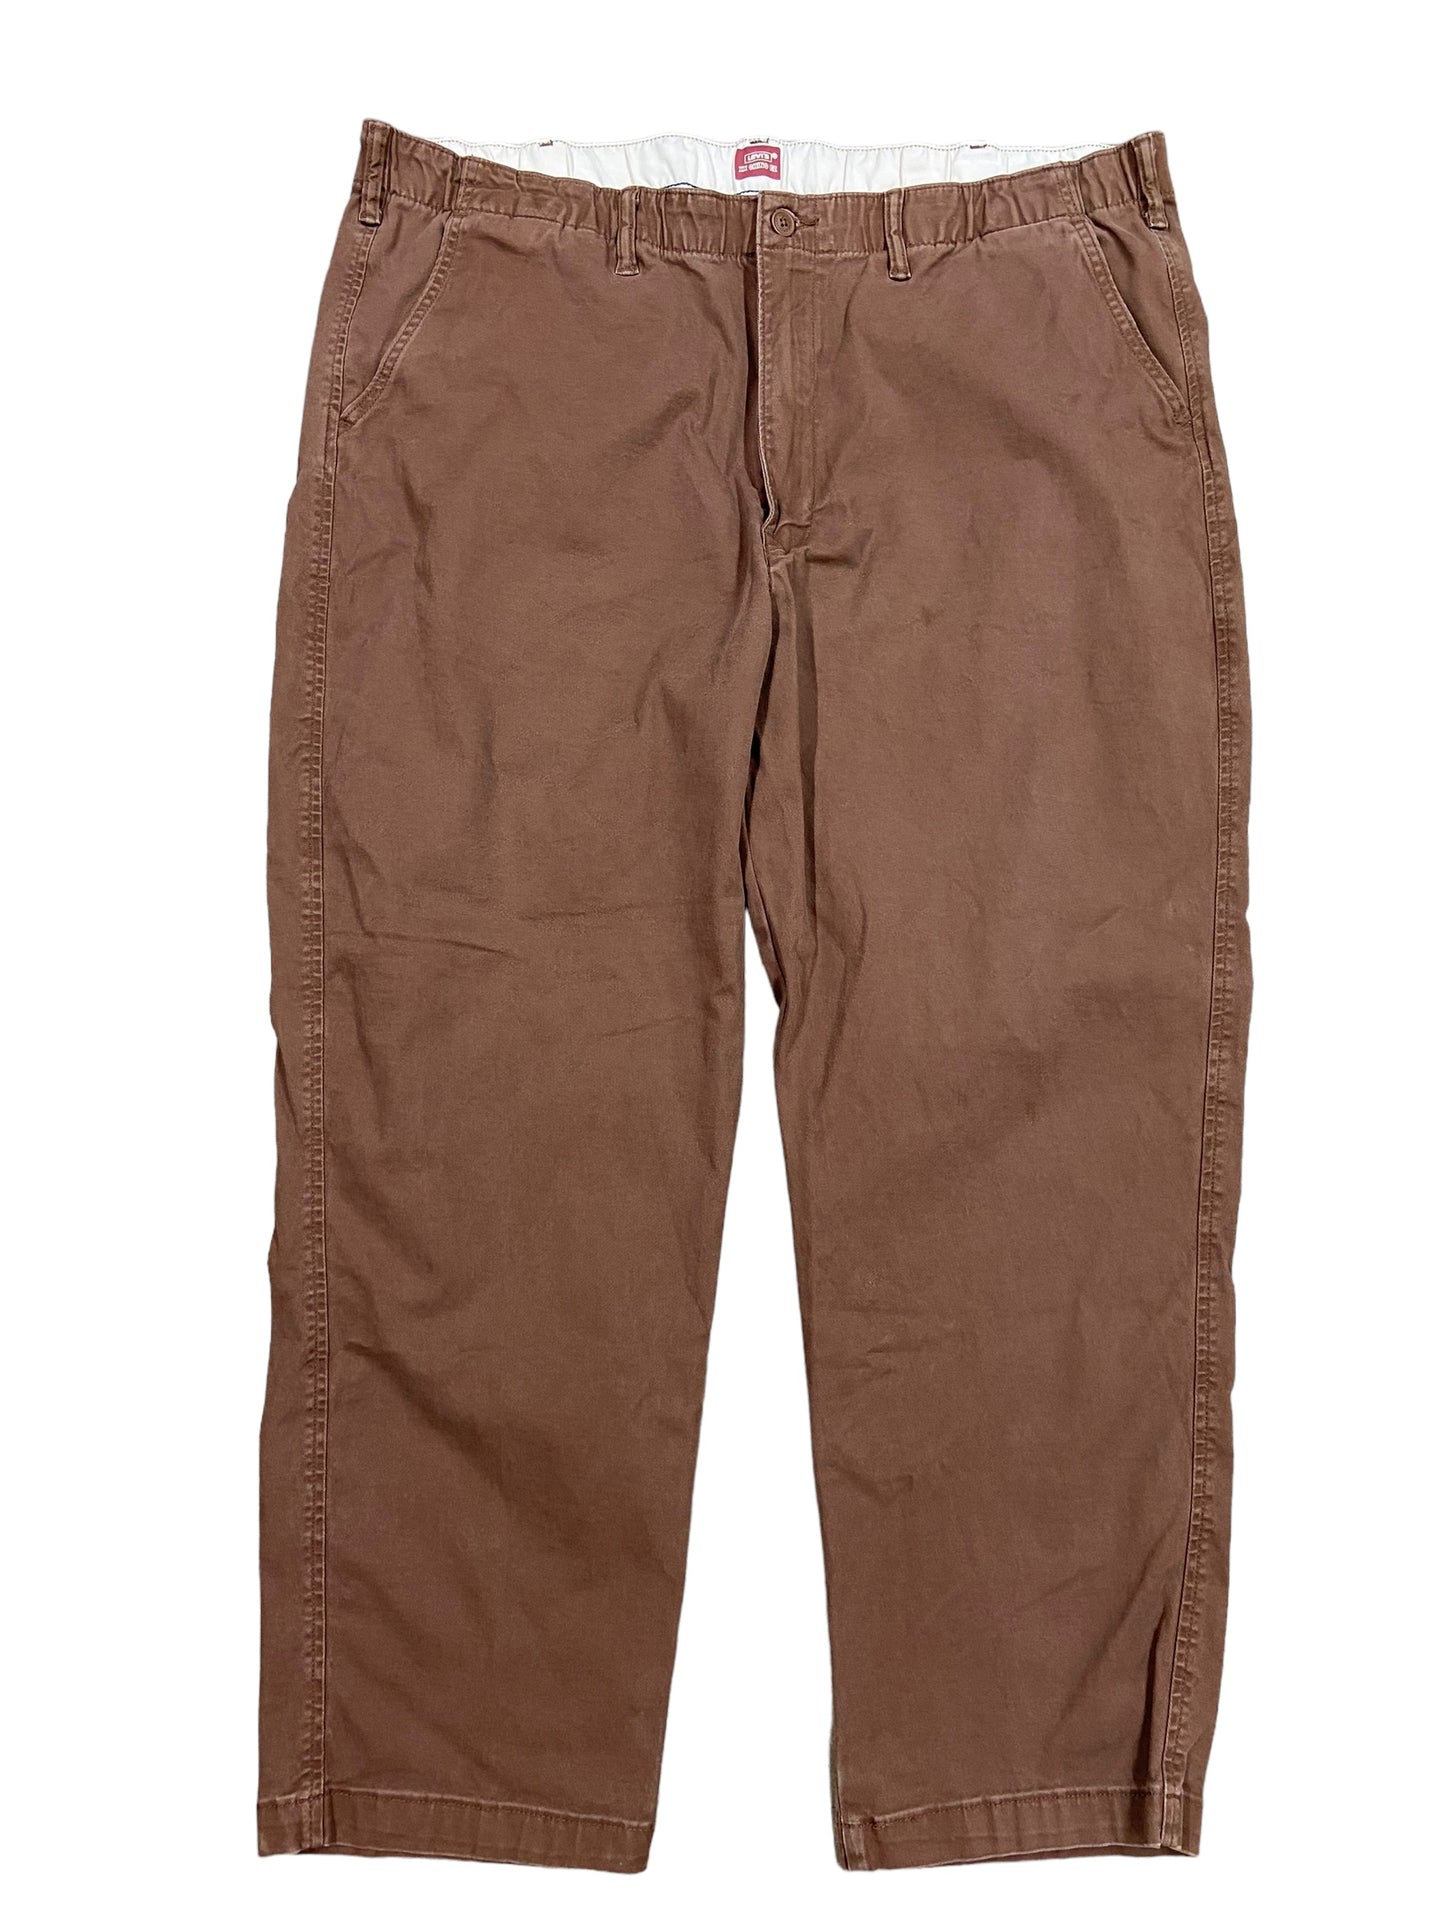 Levi's Chino xx Slim Tapper Fit Chocolate Brown Pants Sz 44x28